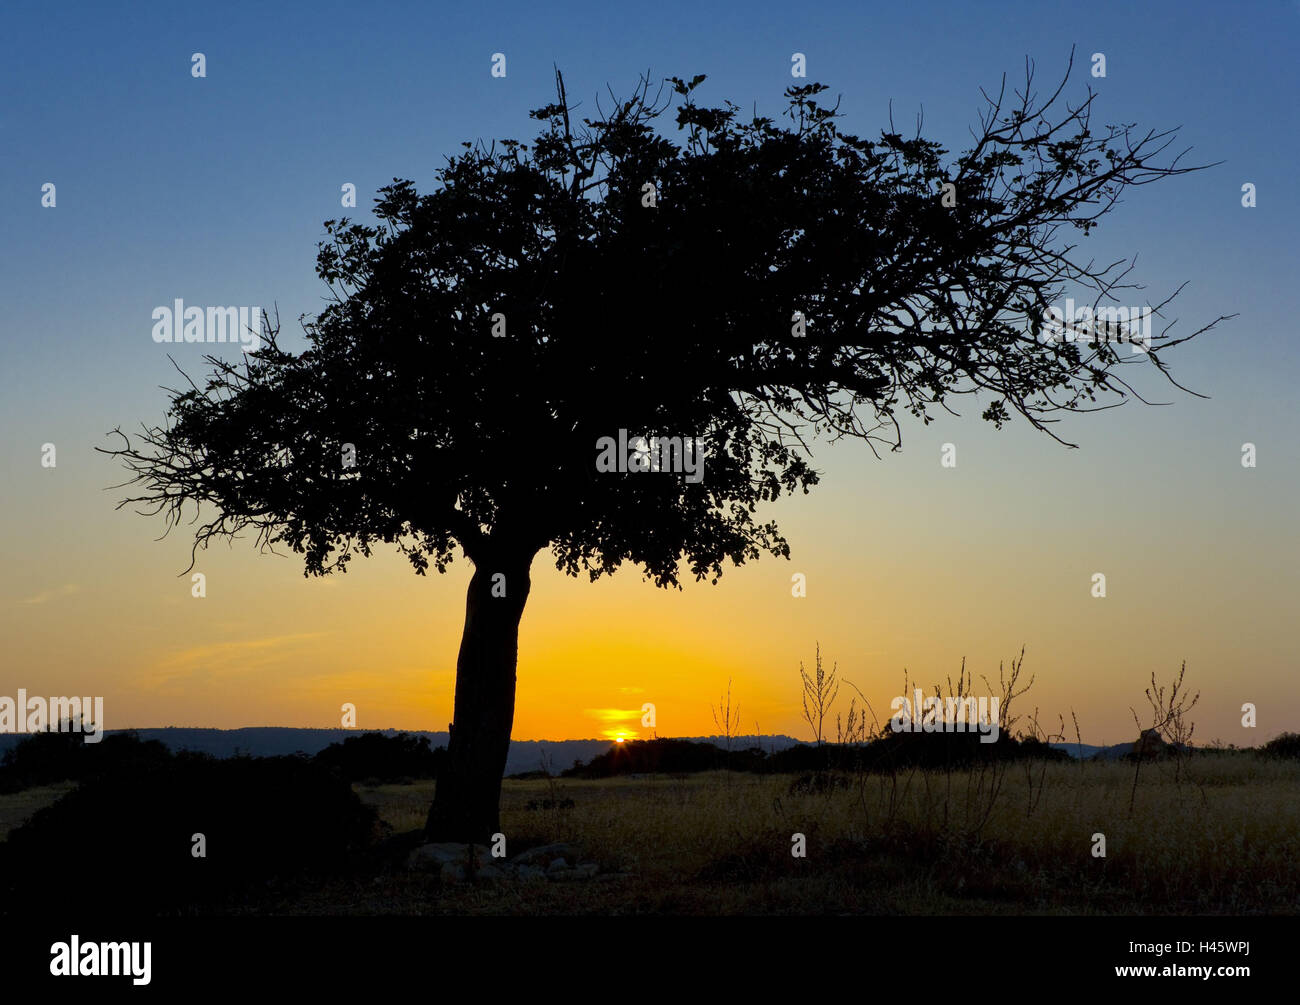 Cyprus, Pissouri, plateau, tree, crooked, silhouette, sundown, Stock Photo